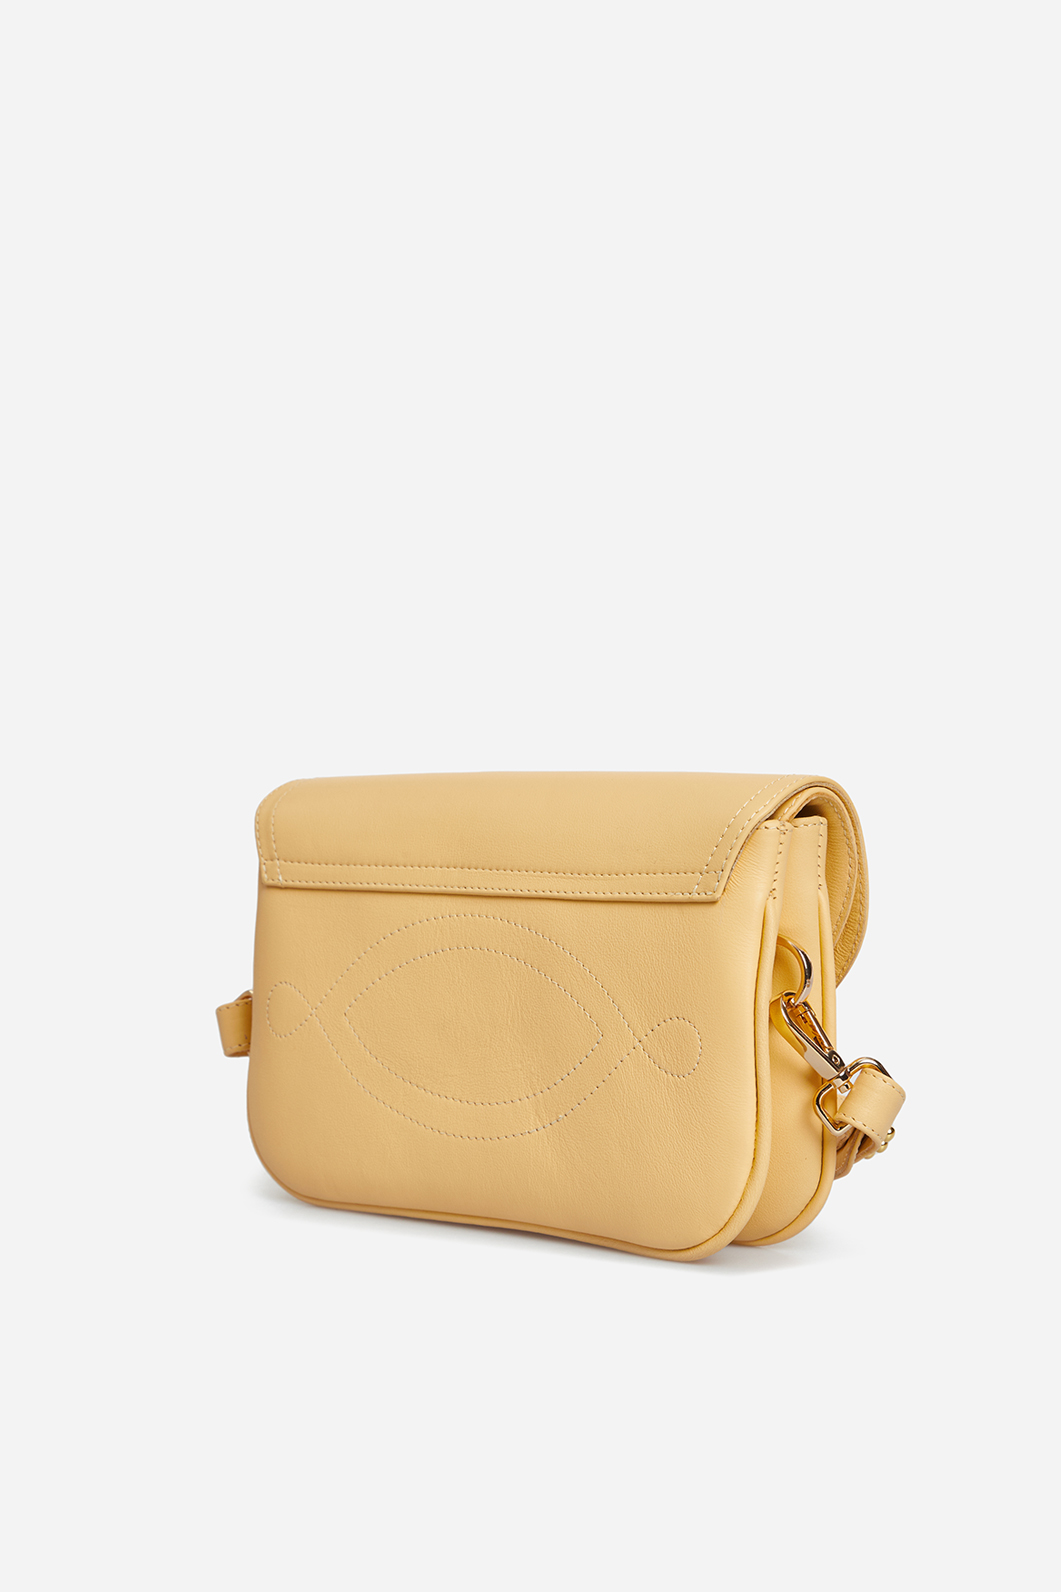 Saddle bag 2
yellow leather crossbody /gold/